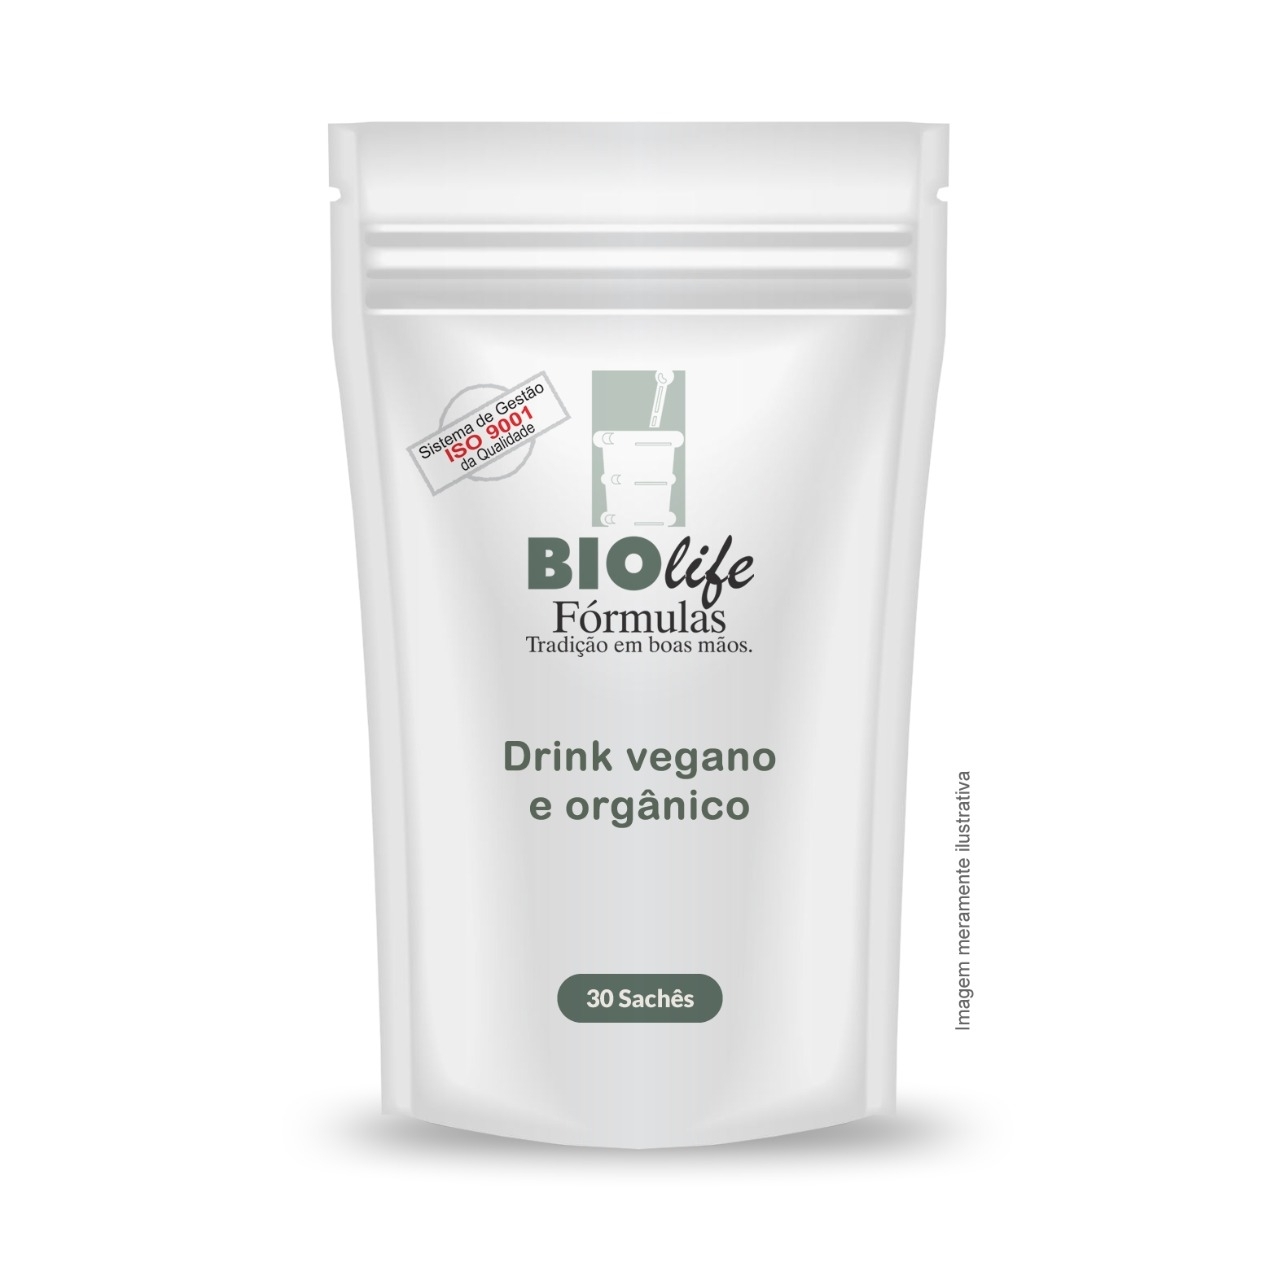 DRINK VEGANO E ORGANICO - BioLife